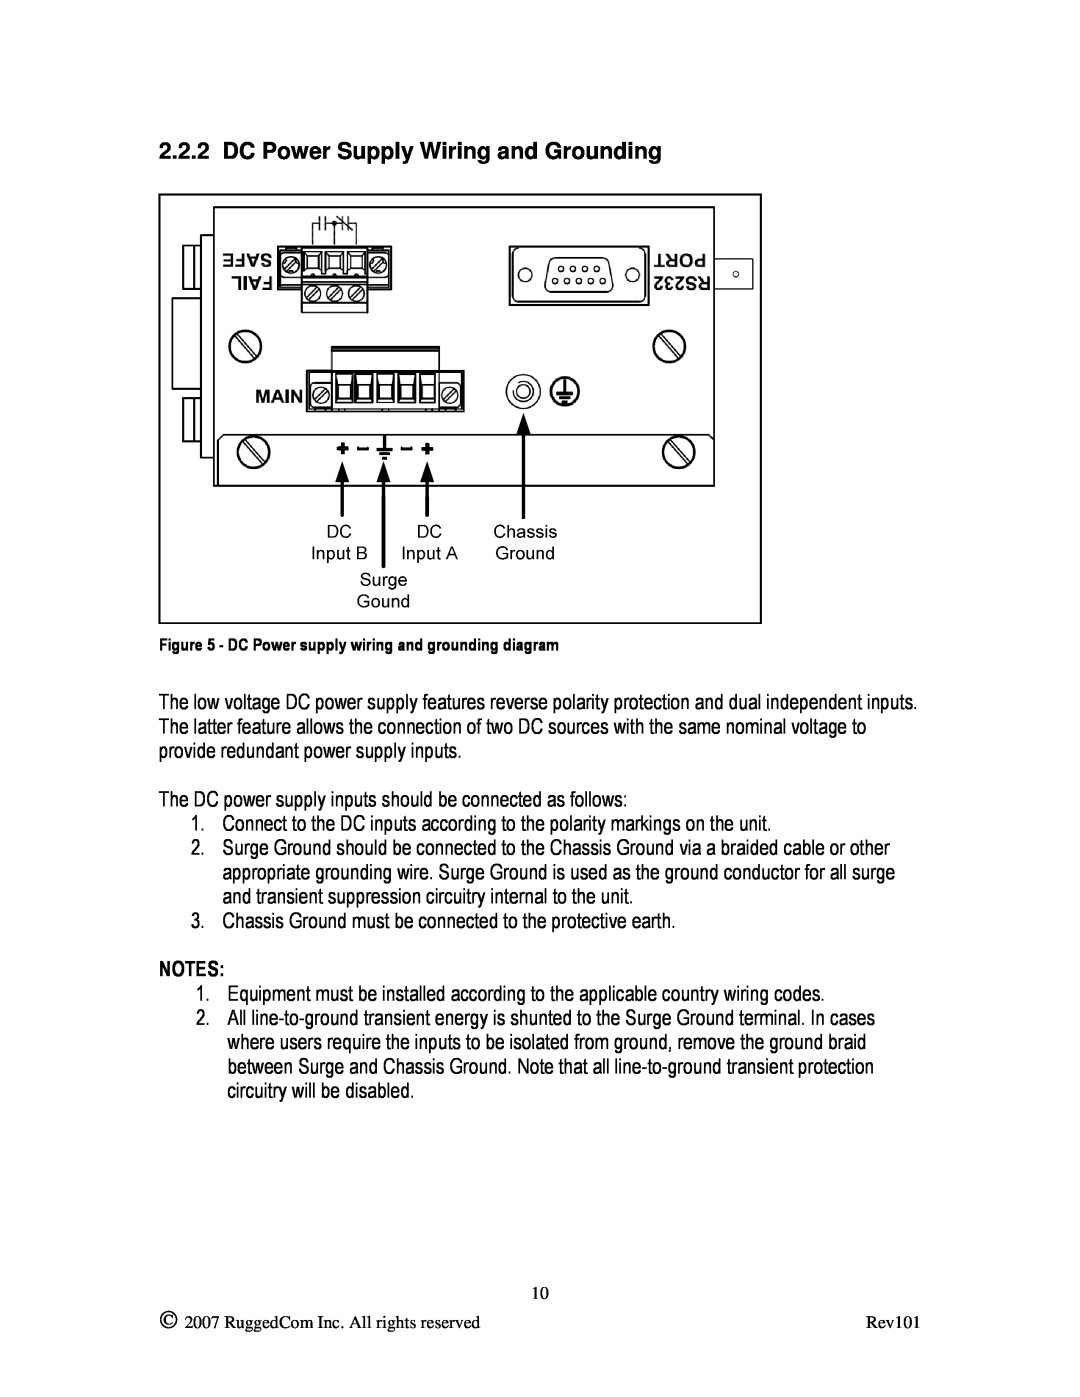 RuggedCom RS900L manual DC Power Supply Wiring and Grounding, DC Power supply wiring and grounding diagram 